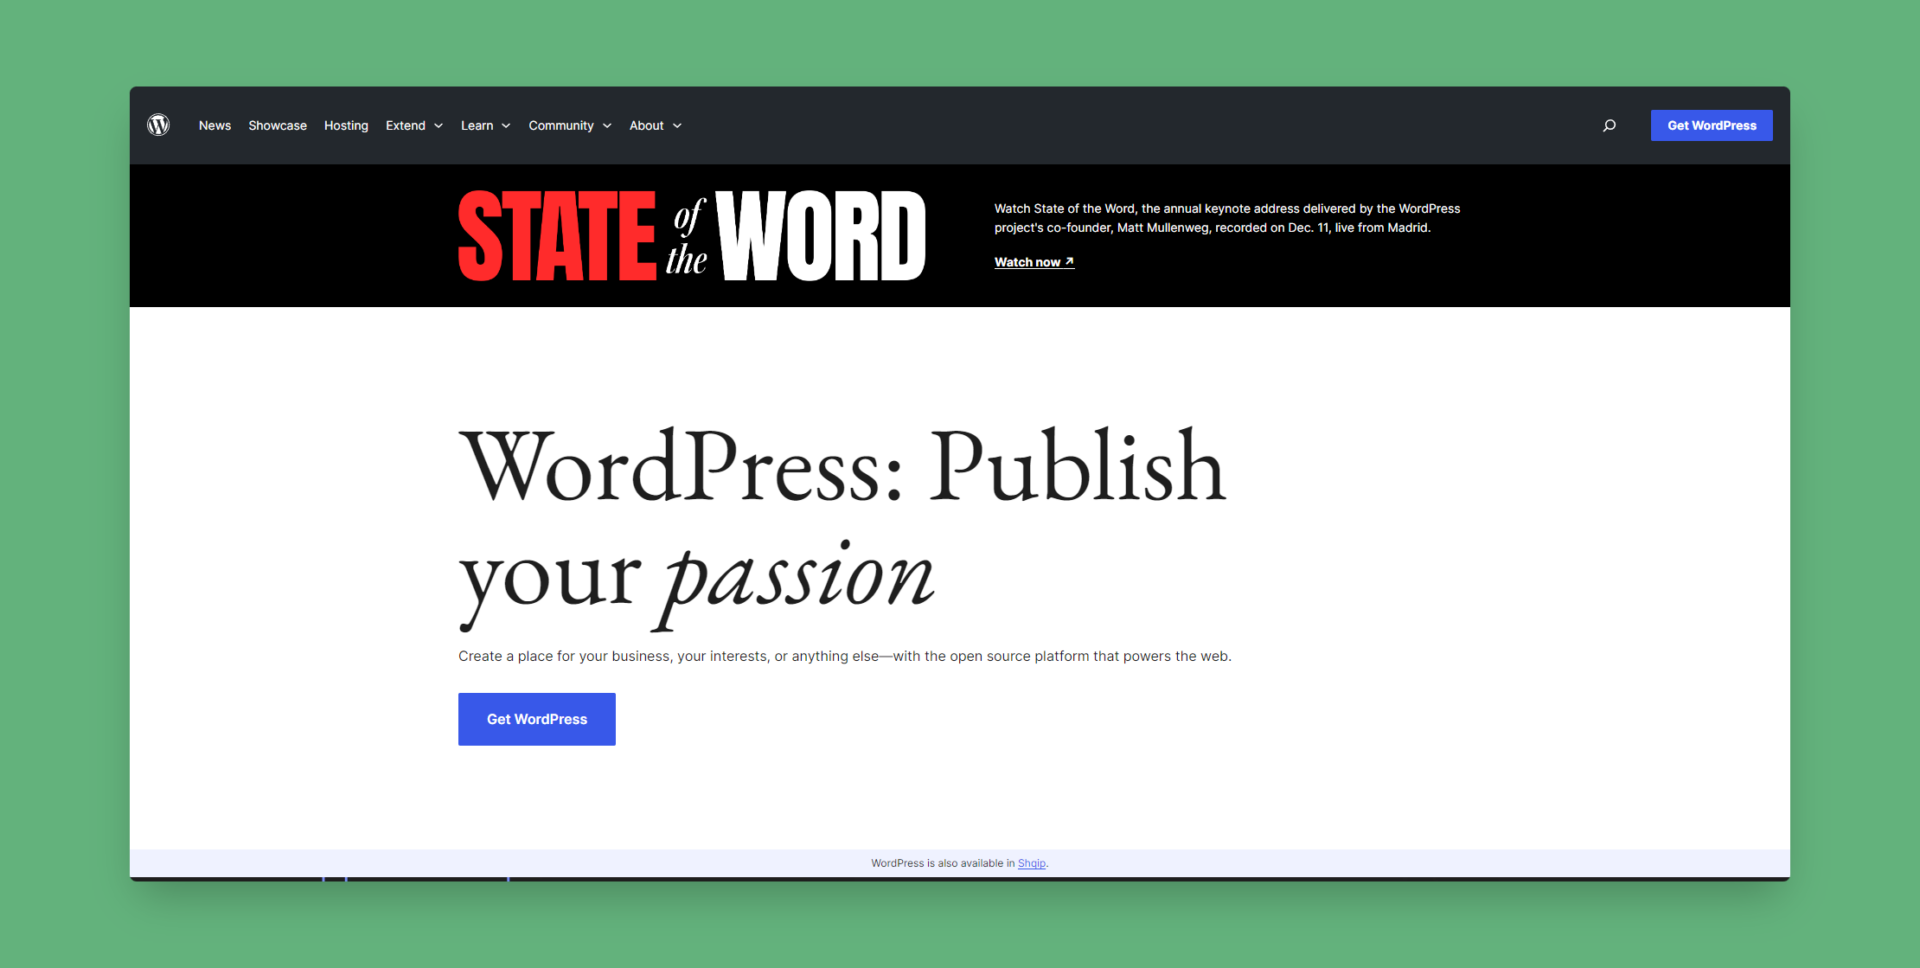 WordPress homepage promoting content publishing platform.